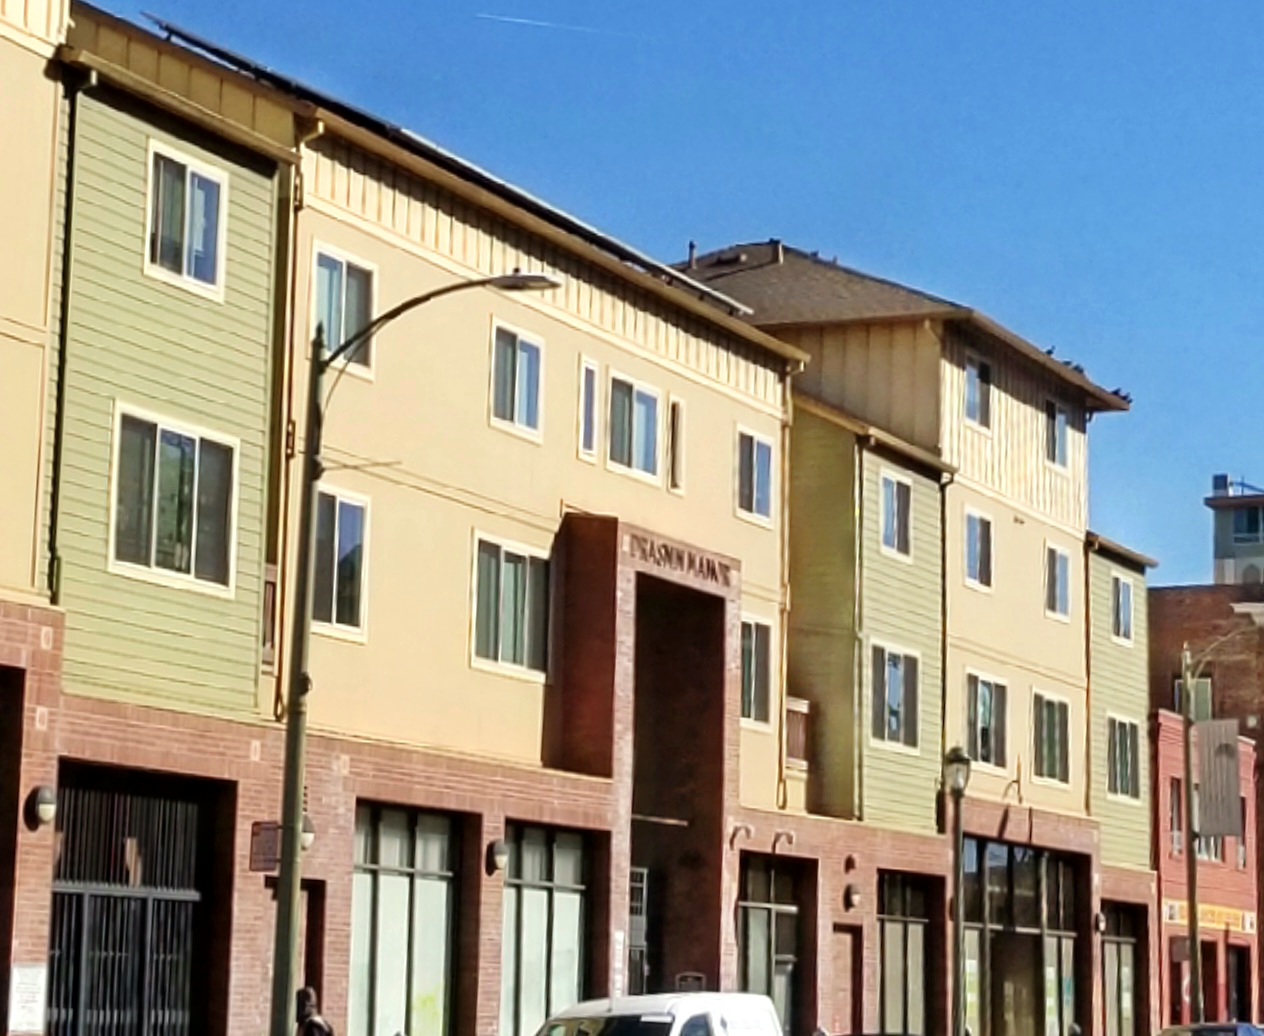 Photo of DRASNIN MANOR APTS. Affordable housing located at 2530 INTERNATIONAL BLVD OAKLAND, CA 94601